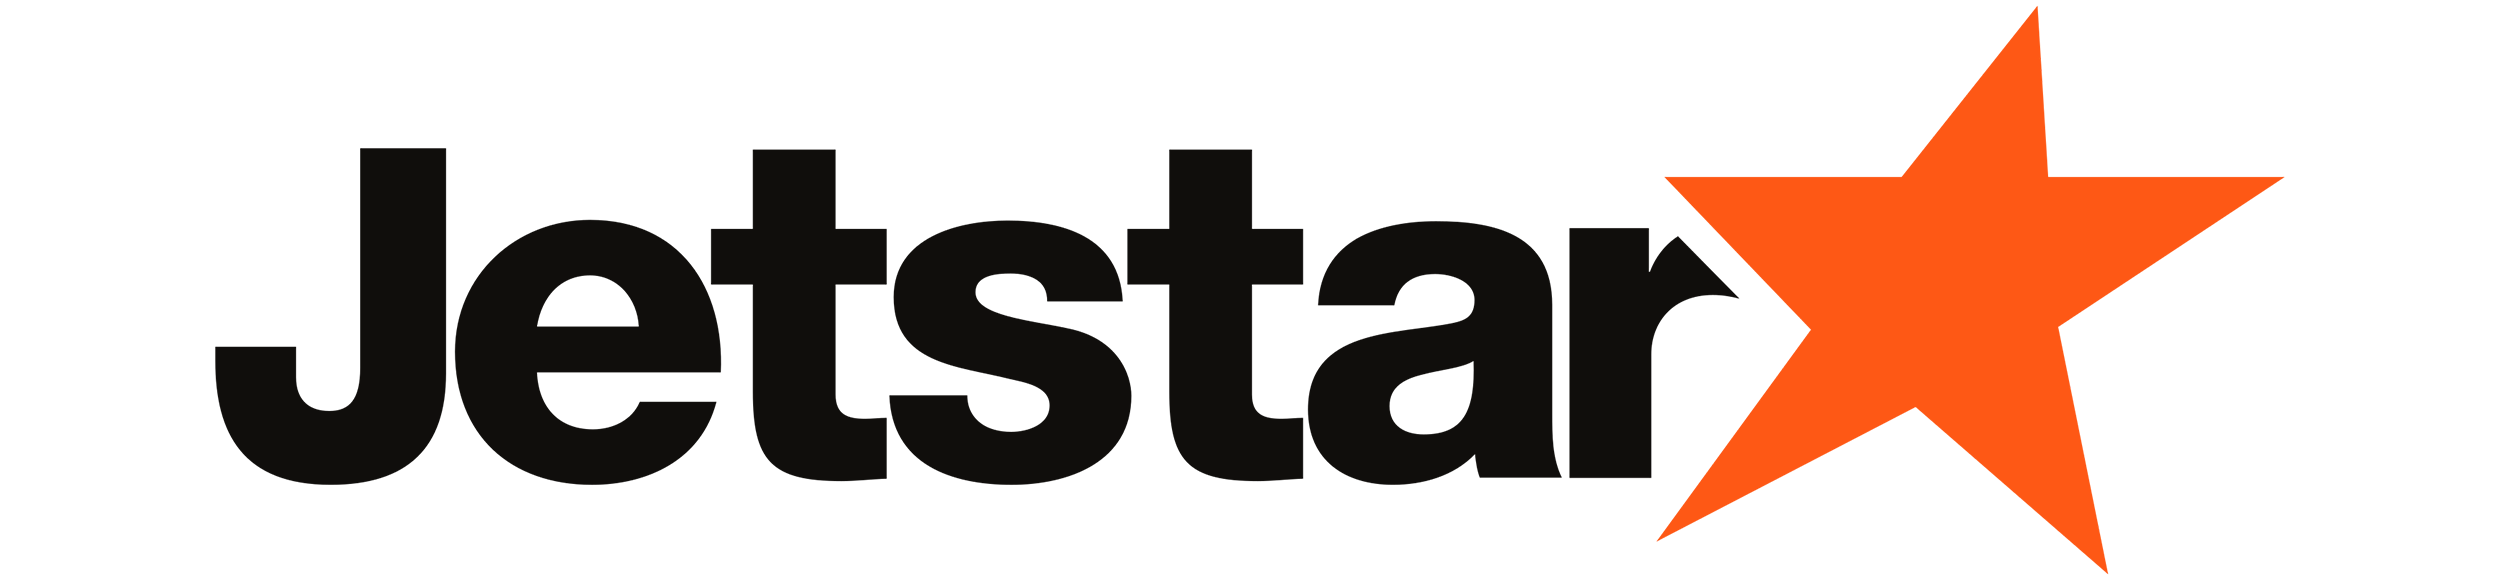 JetStar Asia